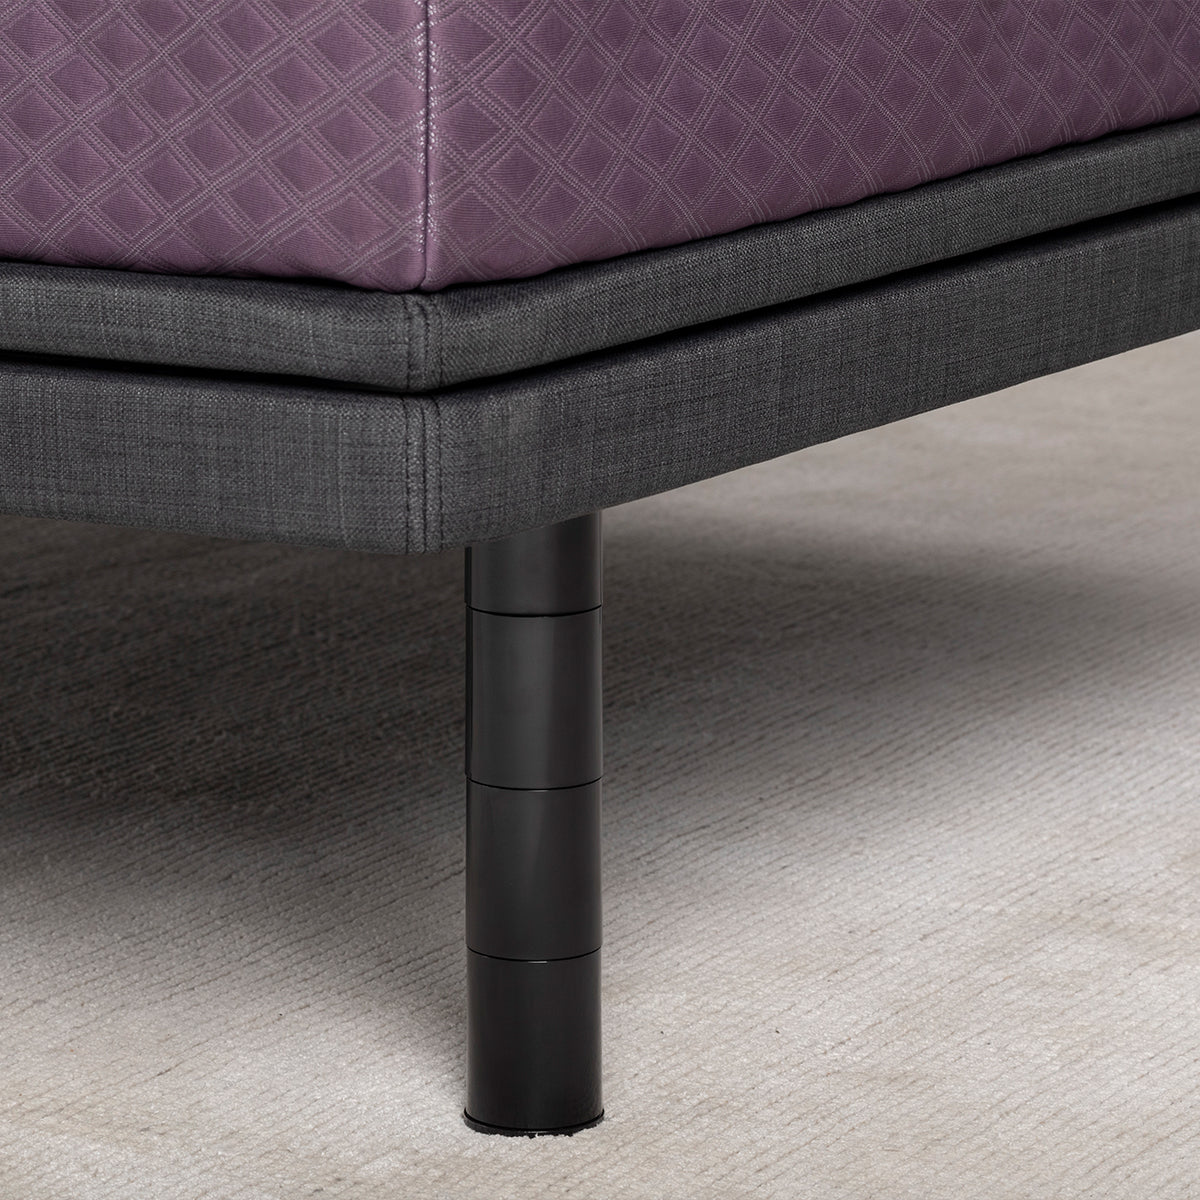 Purple Premium Plus Smart Adjustable Base support legs